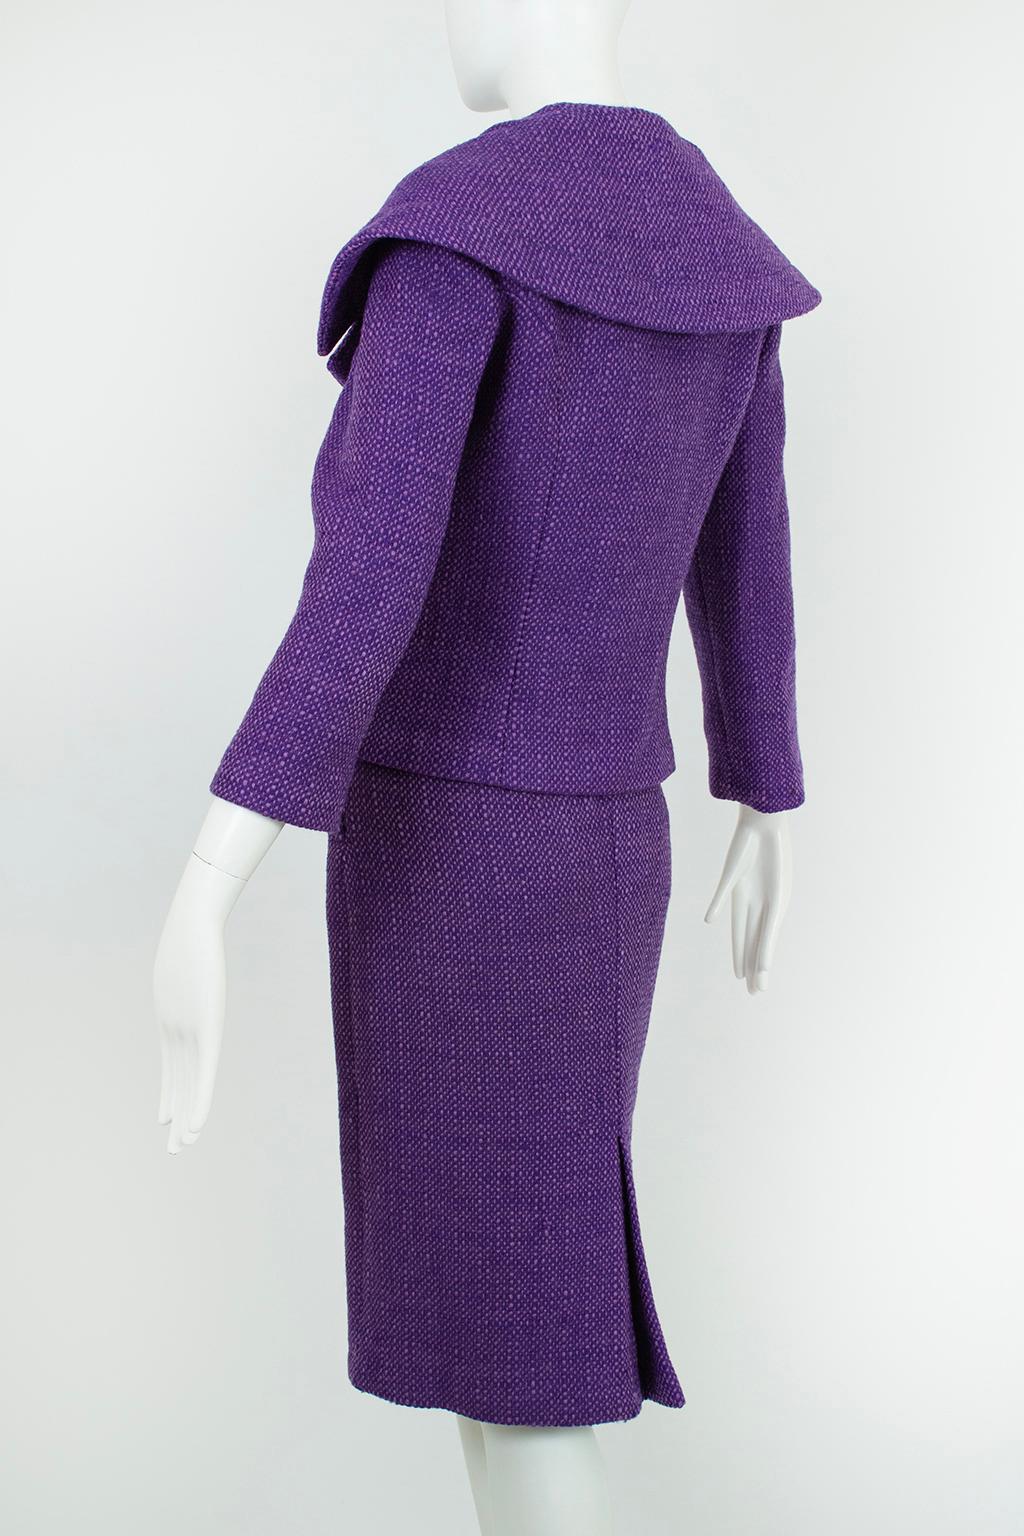 Women's Purple Wool Tweed Portrait Collar ¾ Pencil Suit and Inverness Coat – M, 1950s